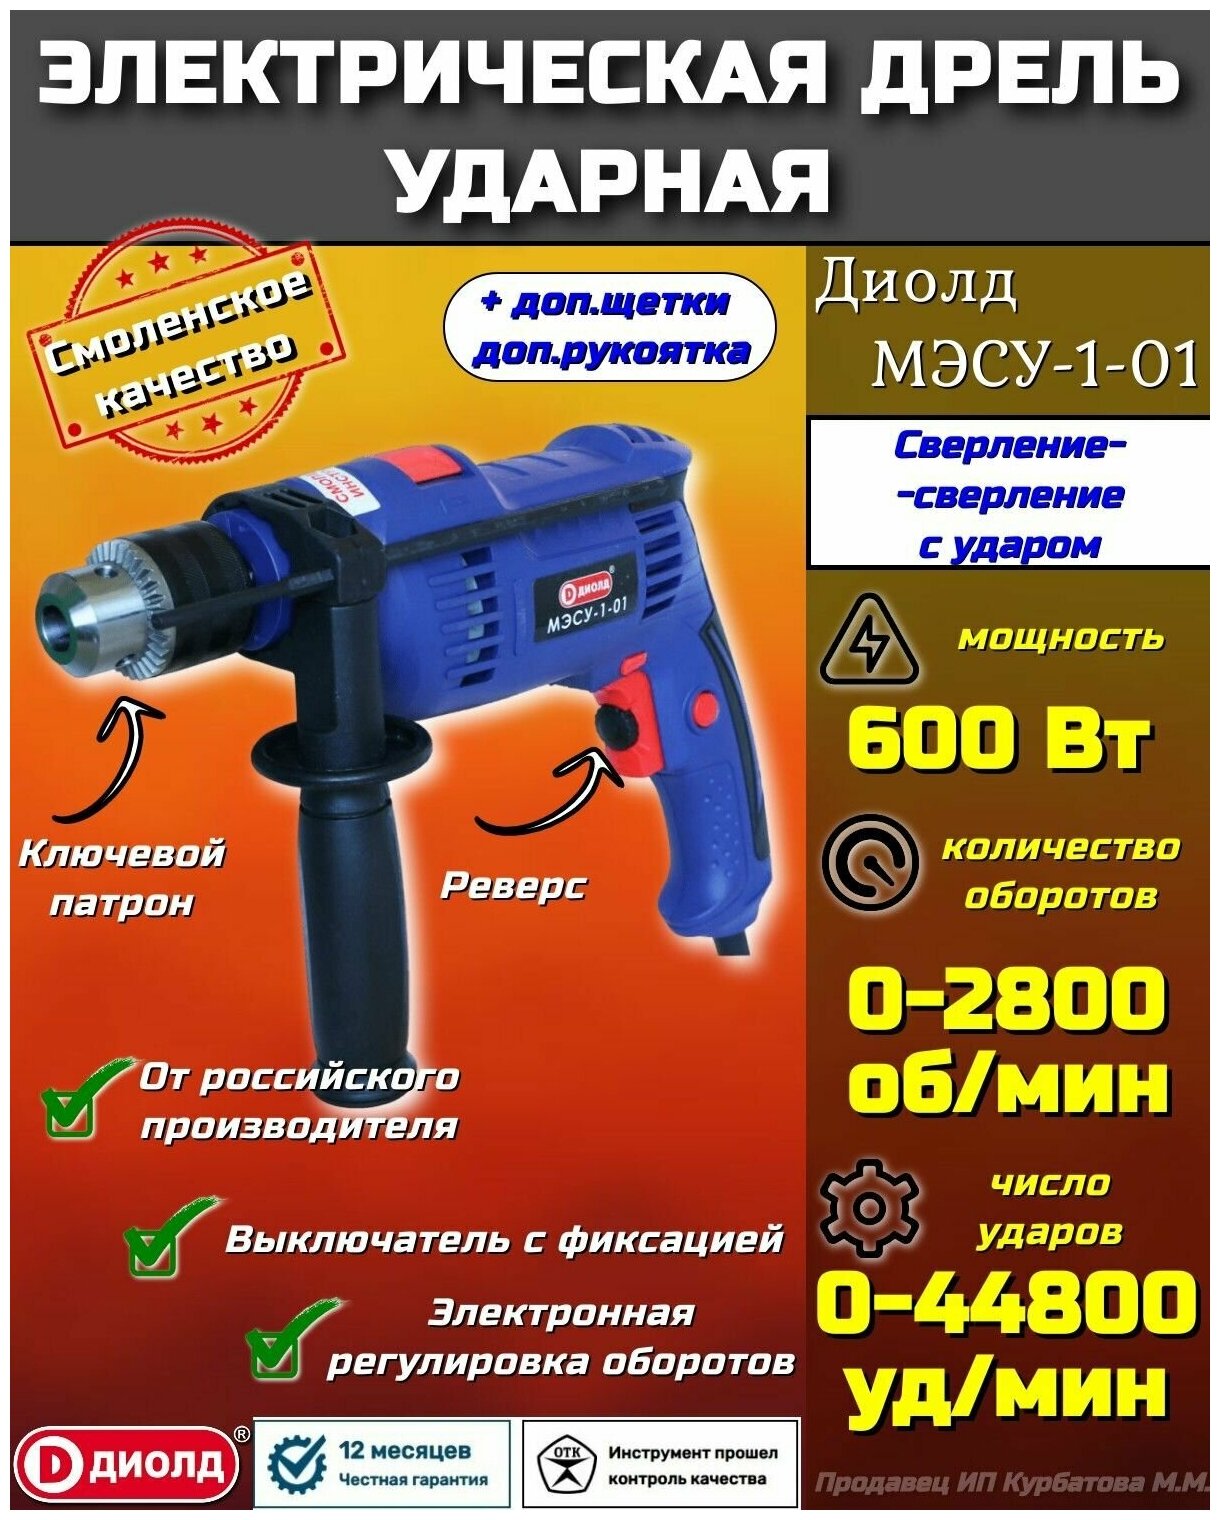 Ударная дрель диолд МЭСУ-1-01, 600 Вт